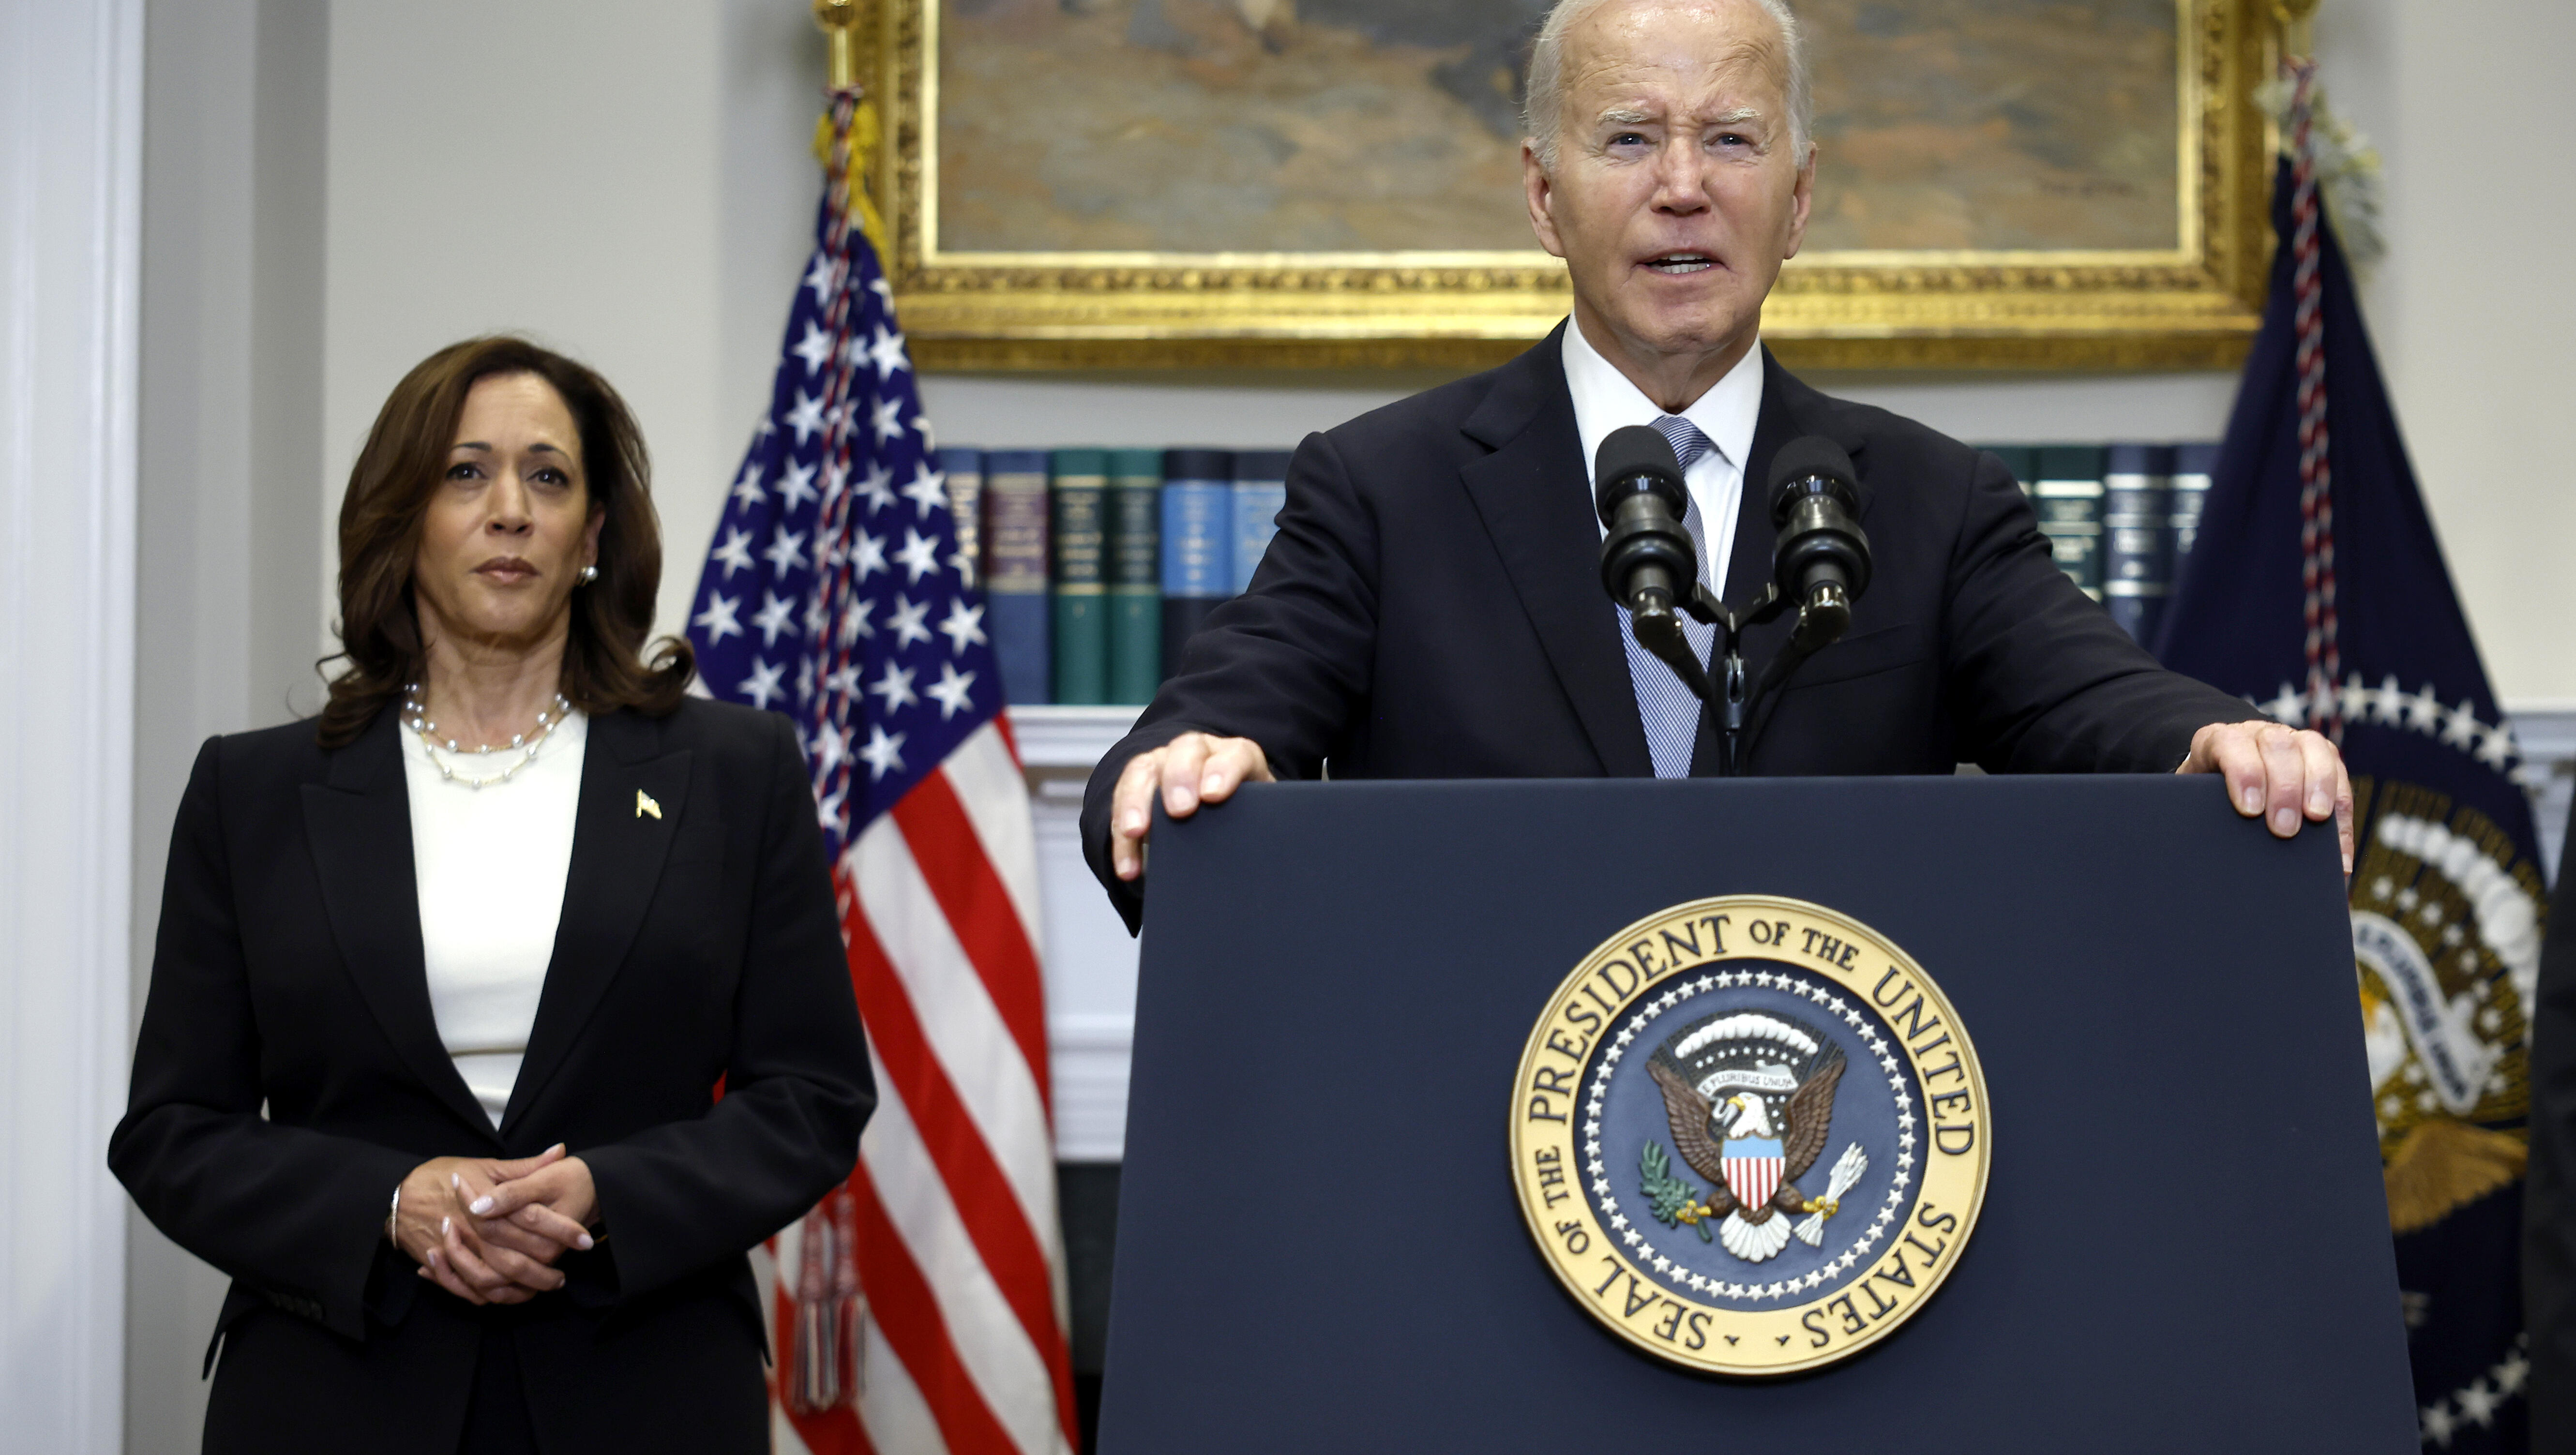 NEW: SC Reacts to Biden drop out, VP Harris endo